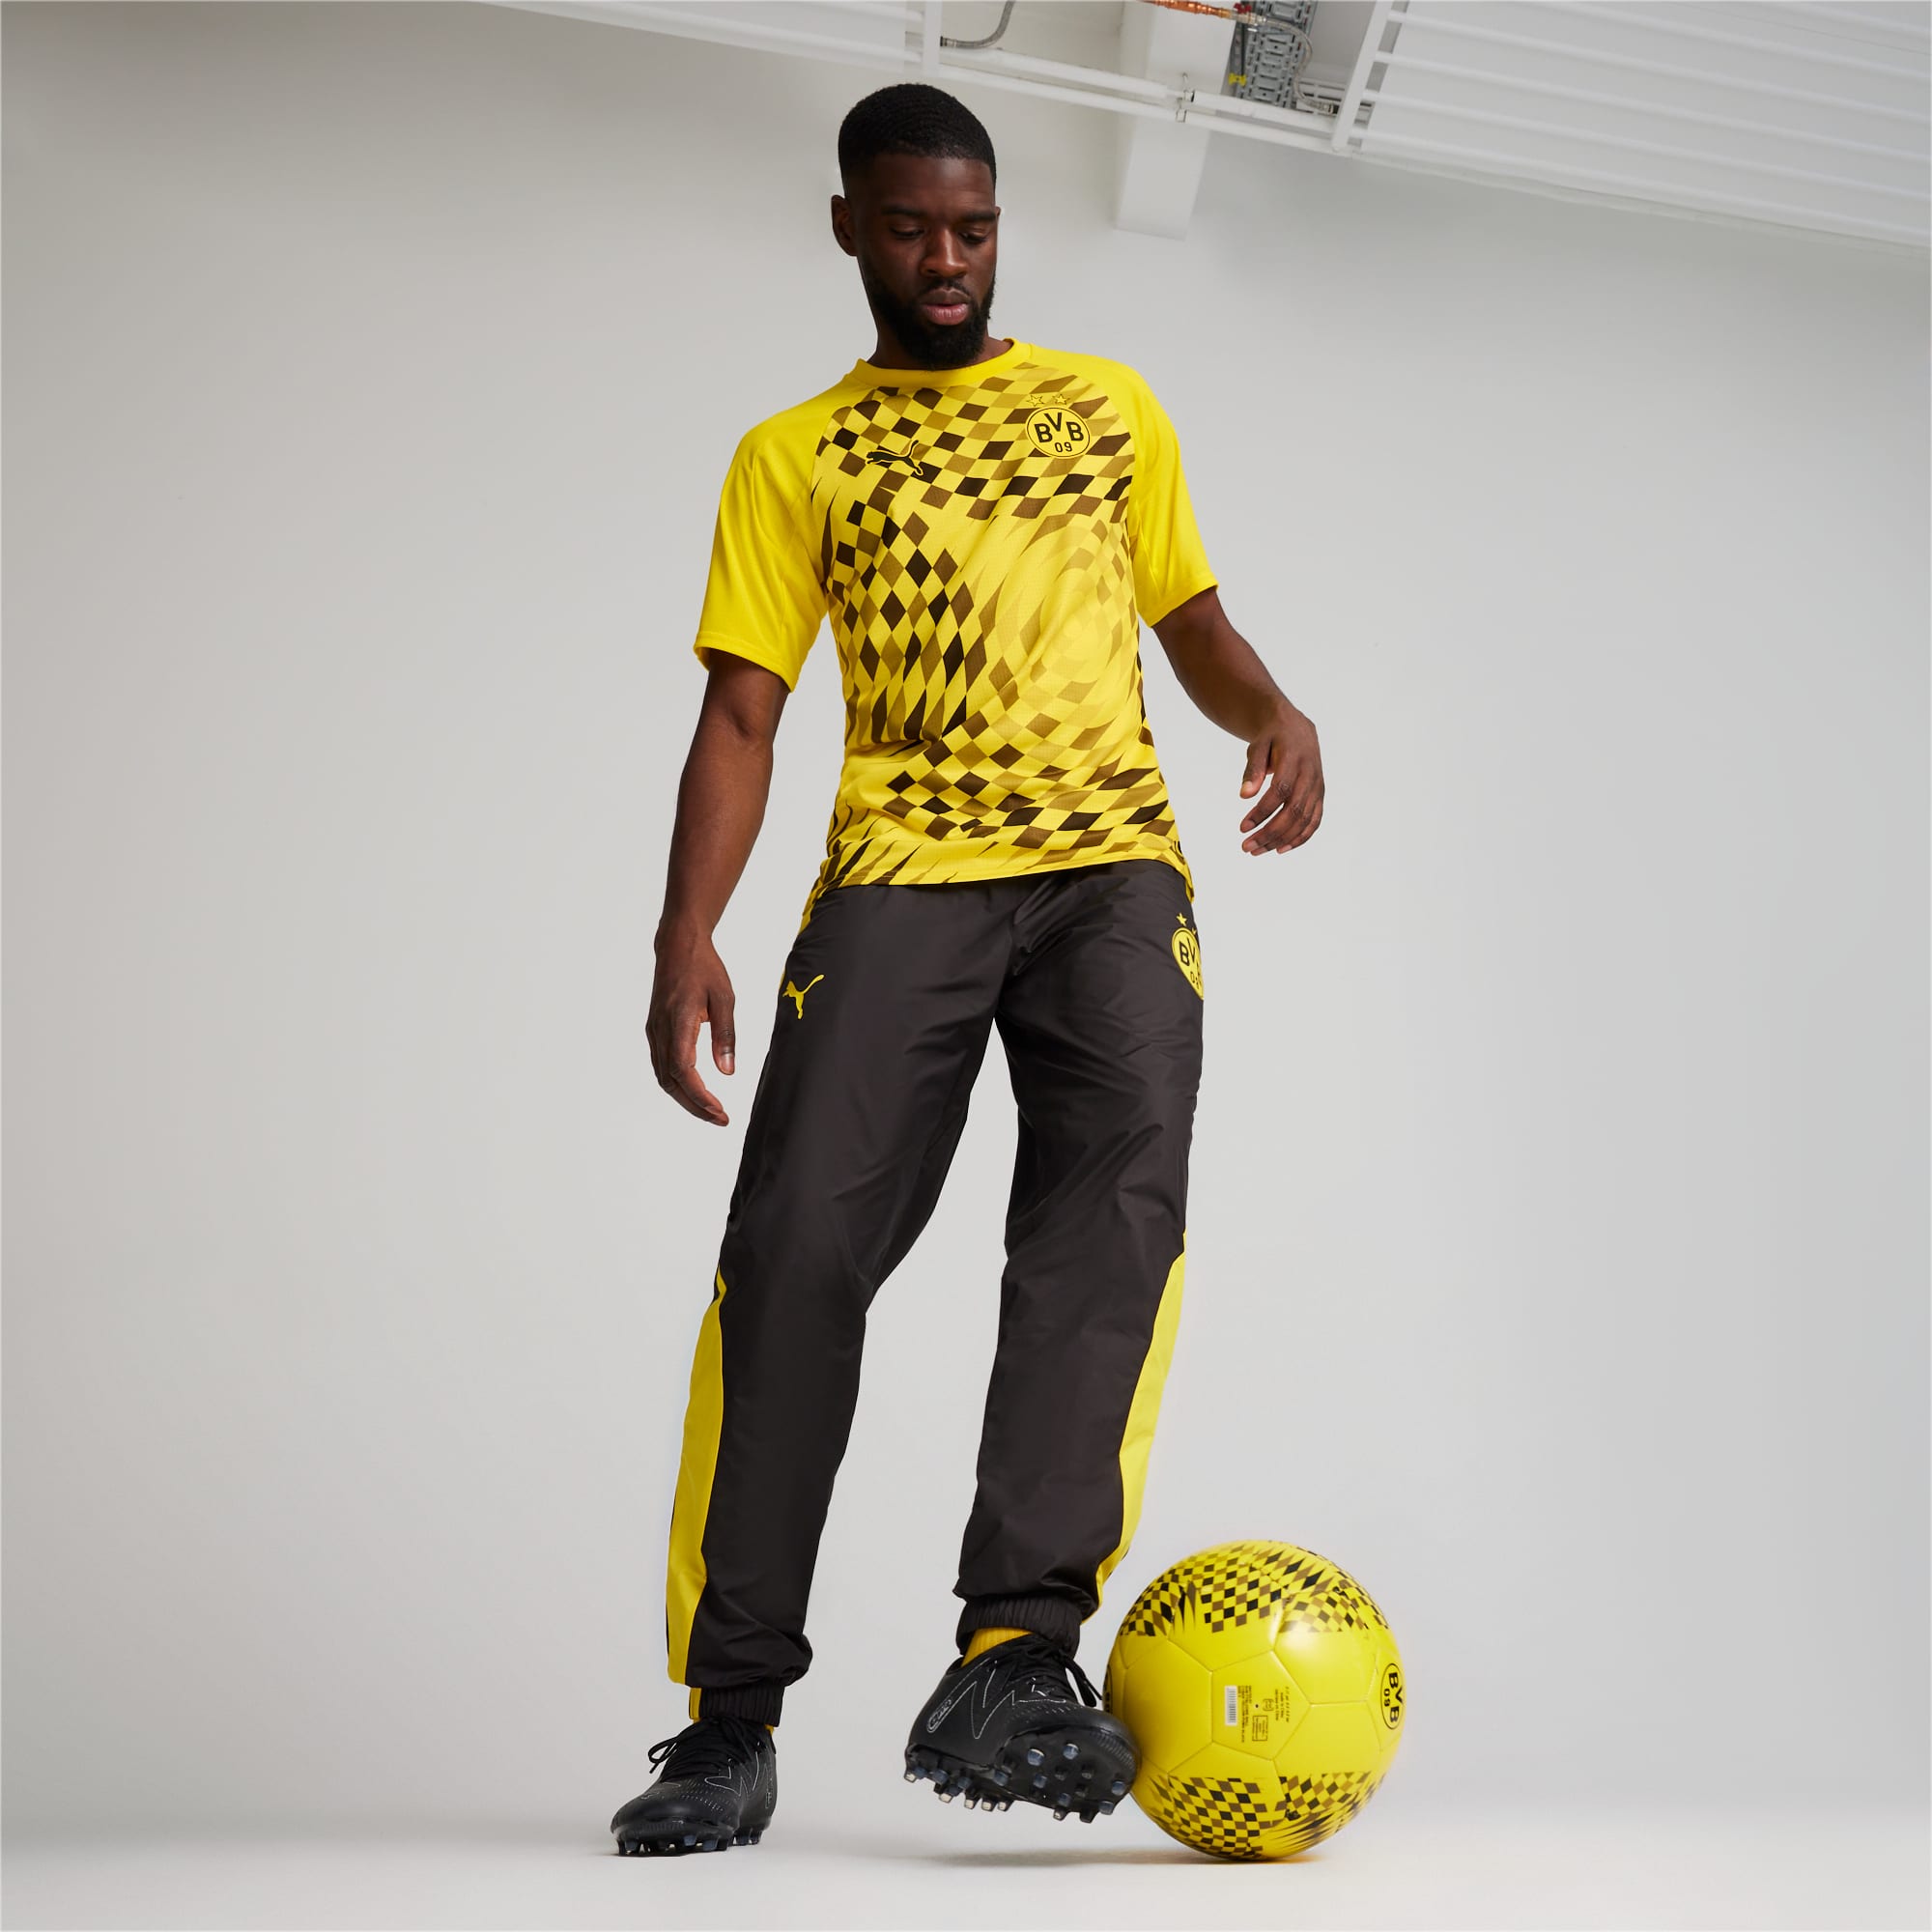 Camiseta deportiva Borussia Dortmund prepartido de manga corta para hombre, yellow